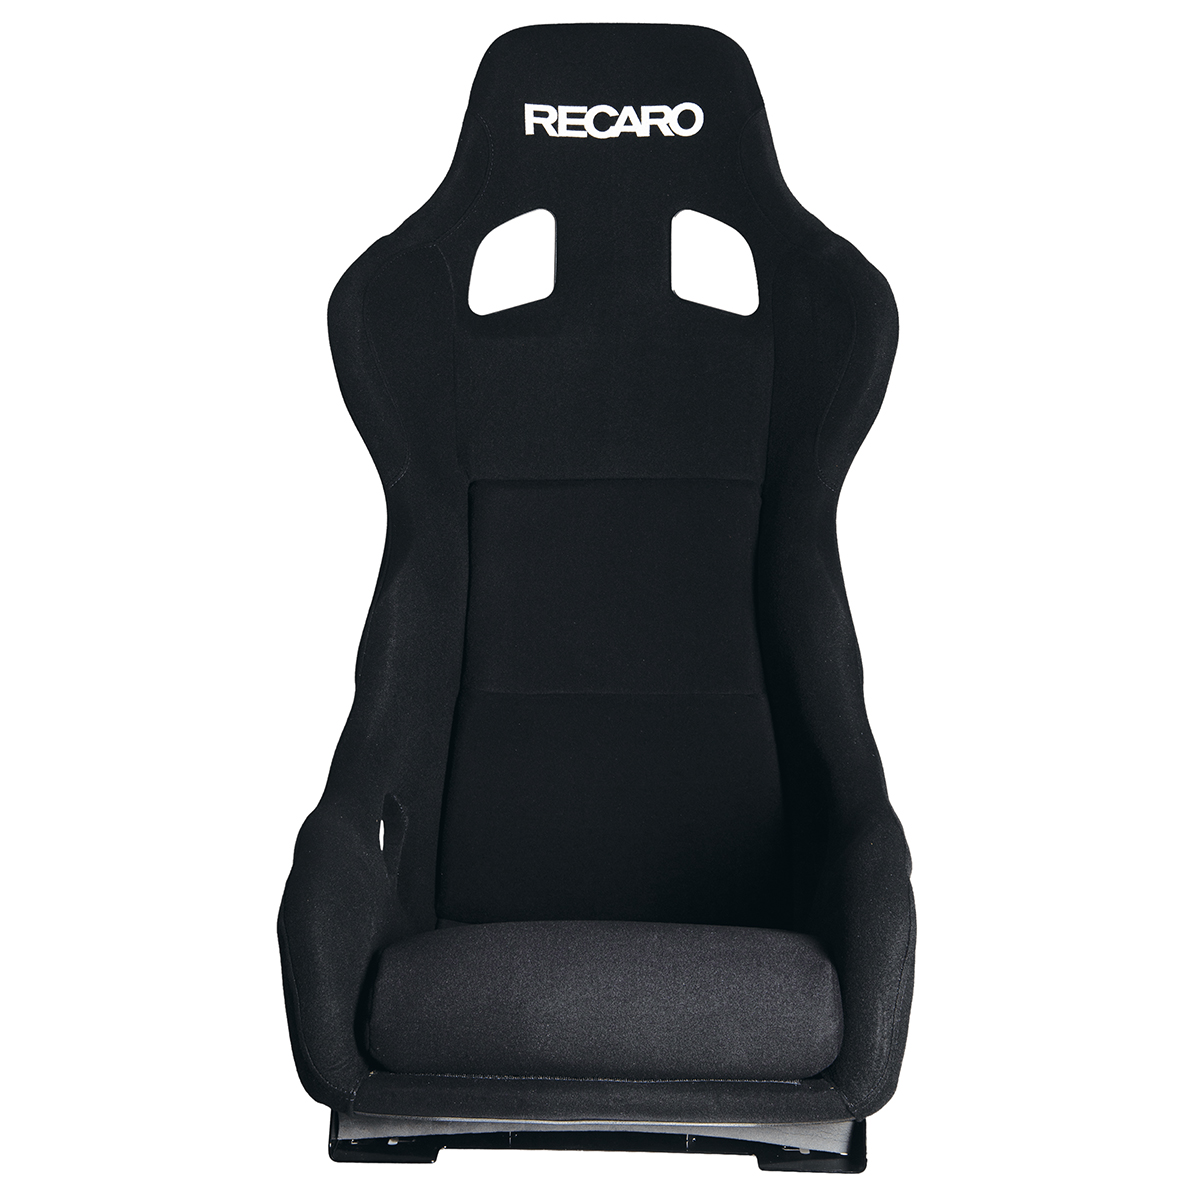 RECARO SIMSTAR- Racing Simulator Seat